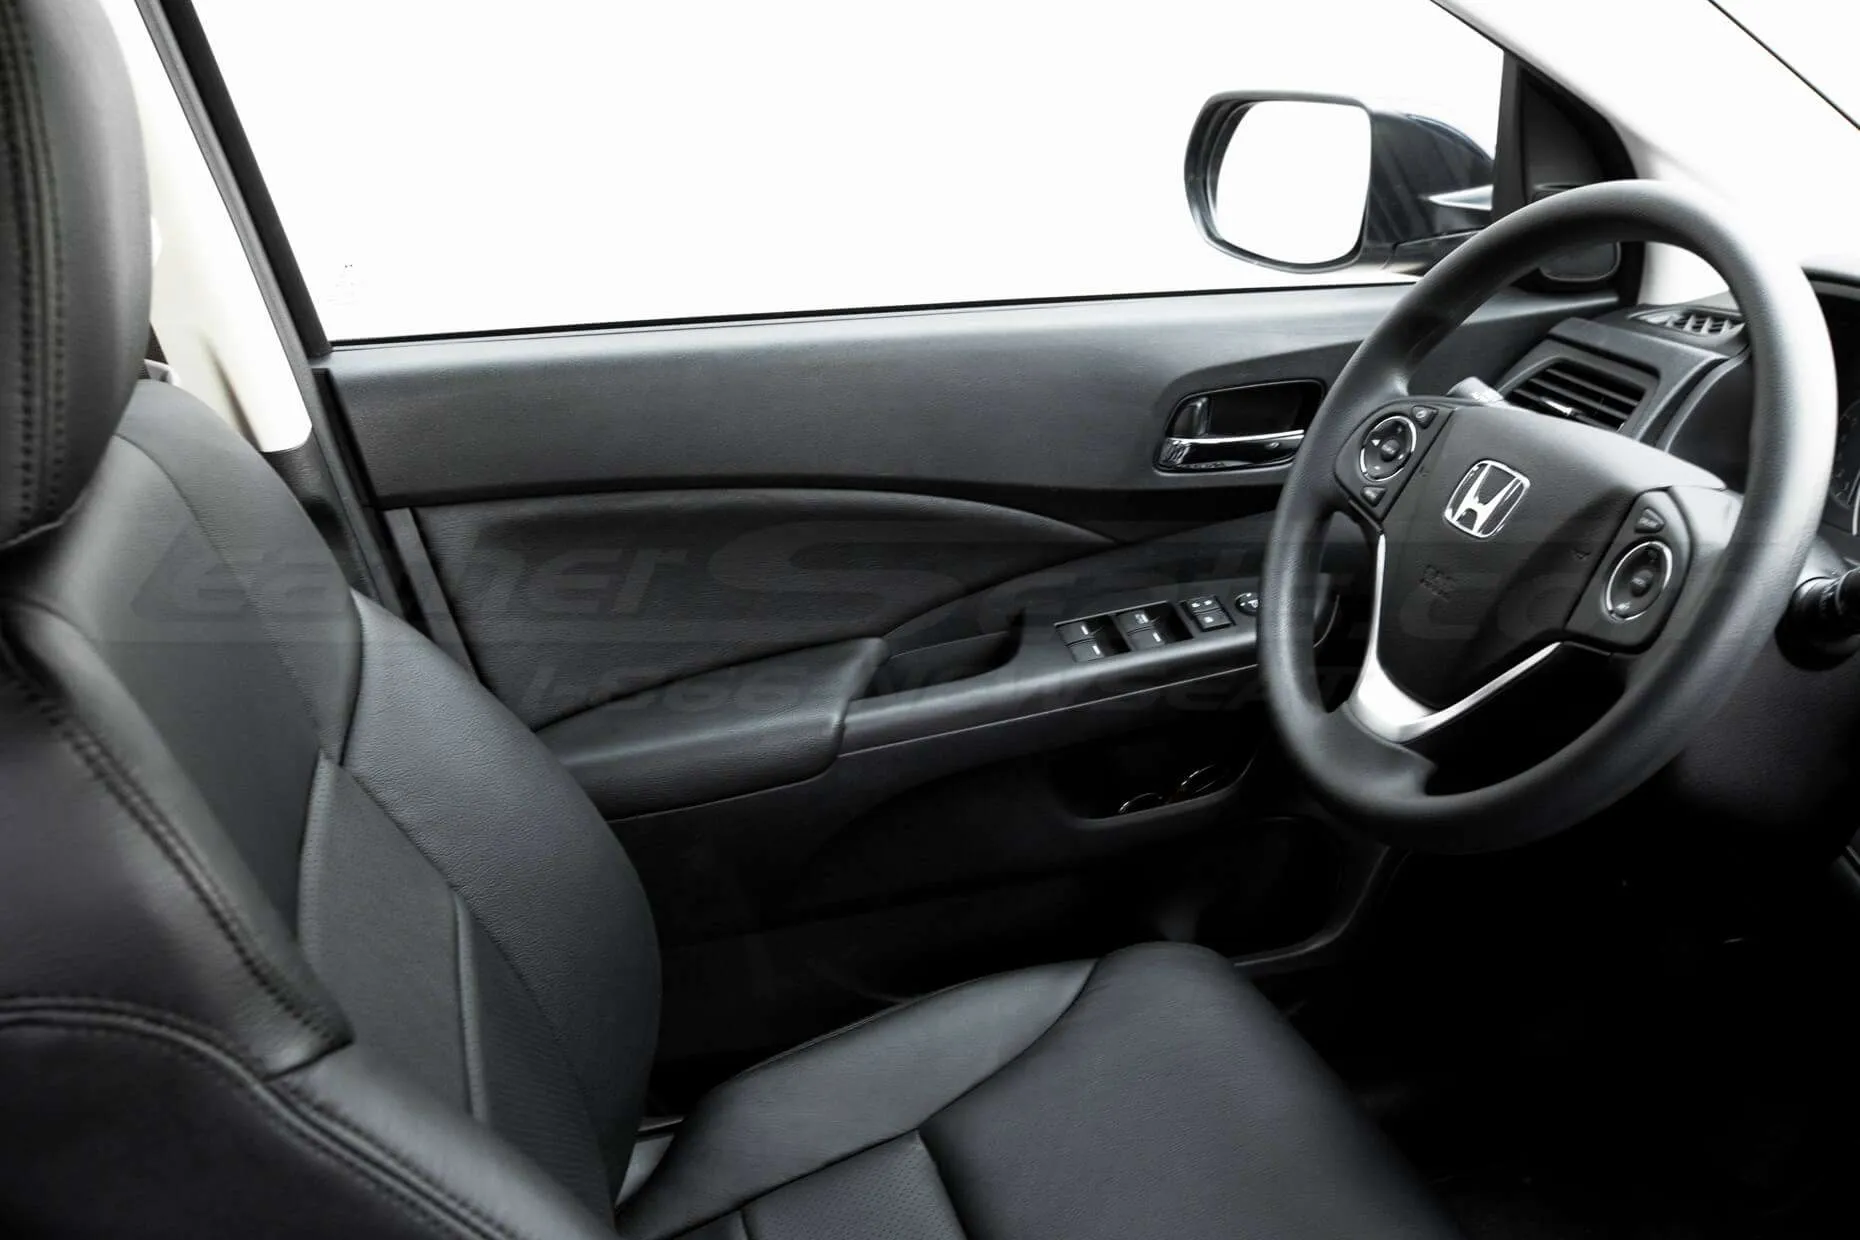 Honda CRV Leather Seat Kit - Black - Installed - Door panel insert and armrest